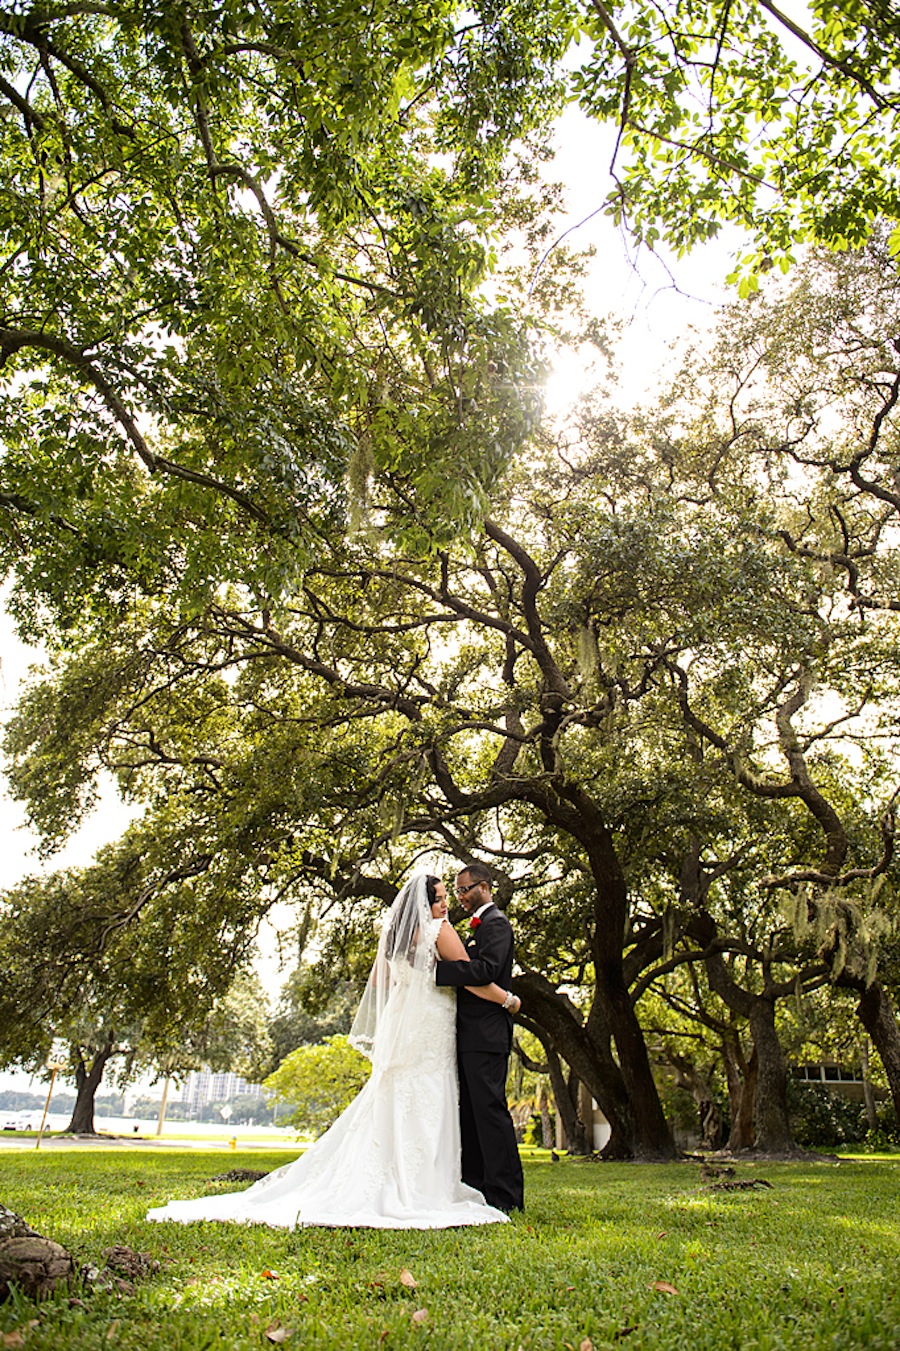 Tampa Garden Club Bride & Groom on Wedding Day | Corey Conroy Photography